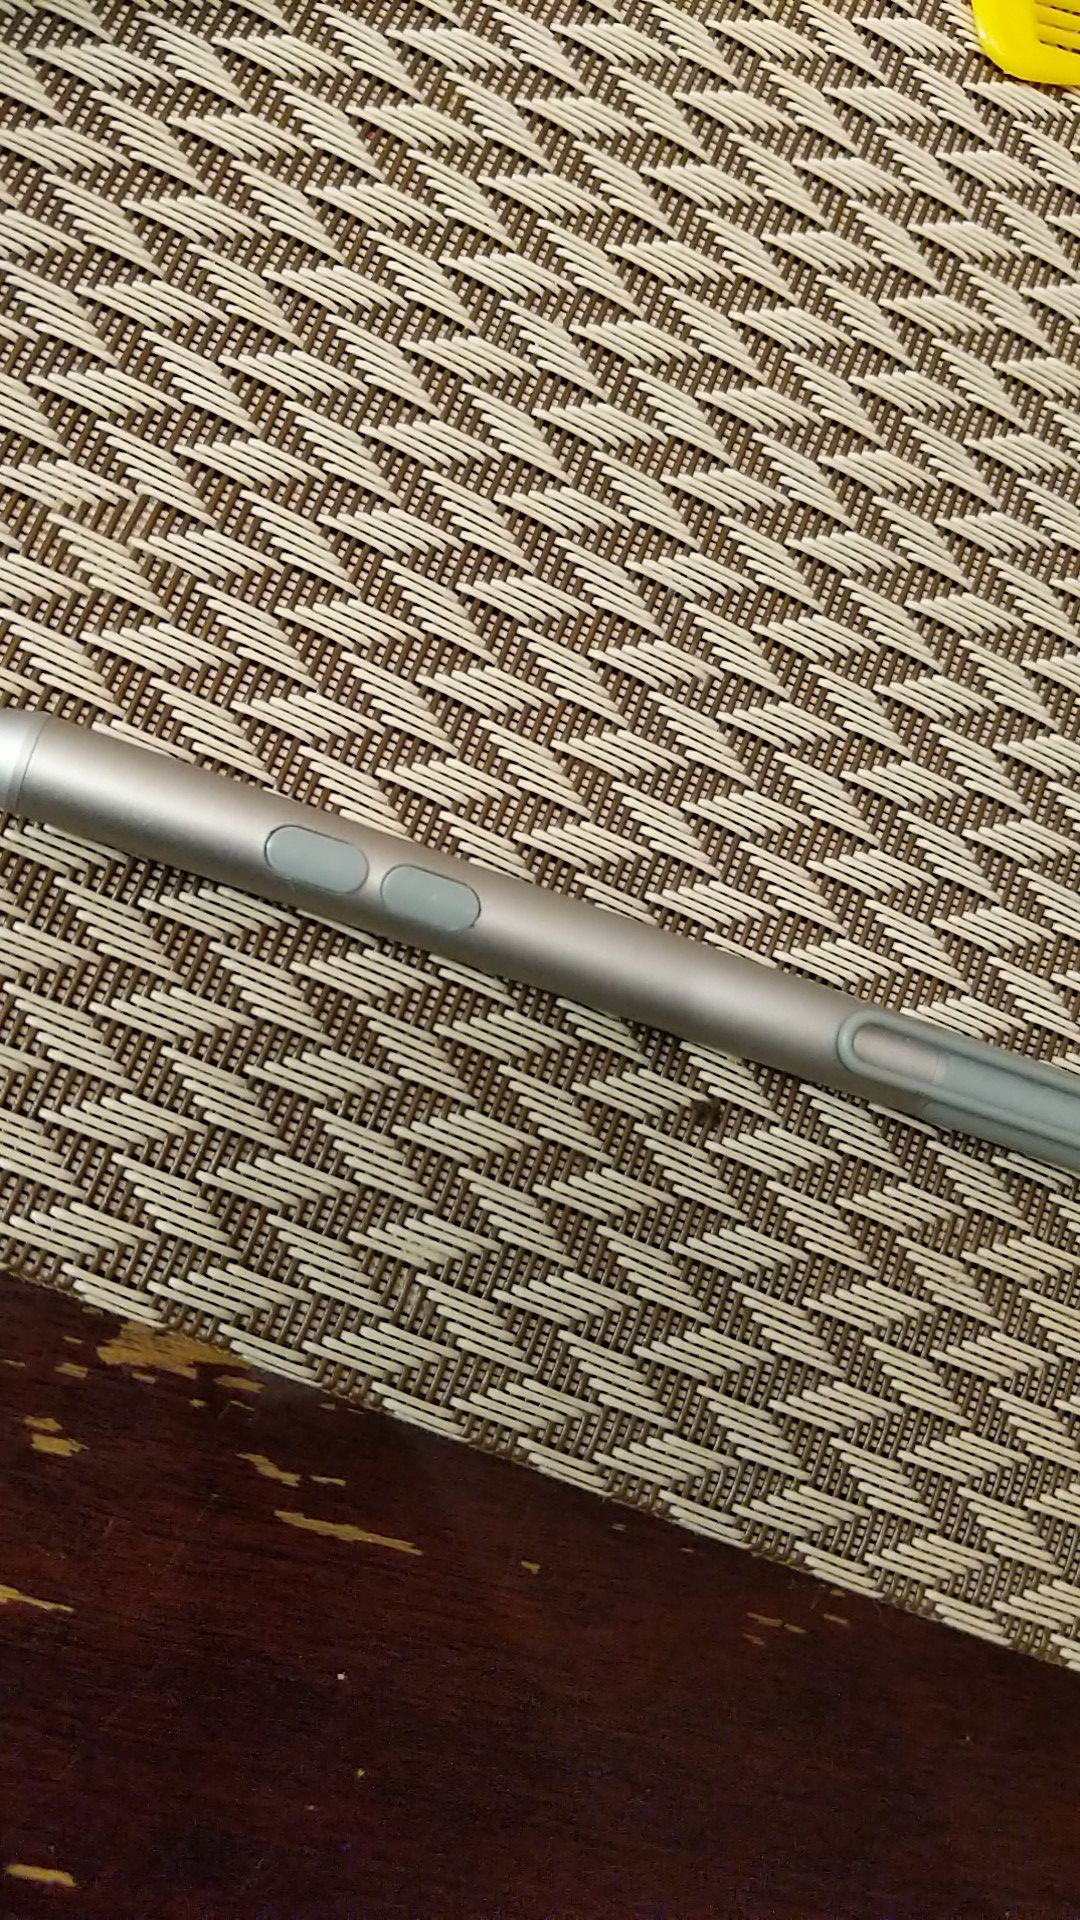 Microsoft surface pro 3 pen